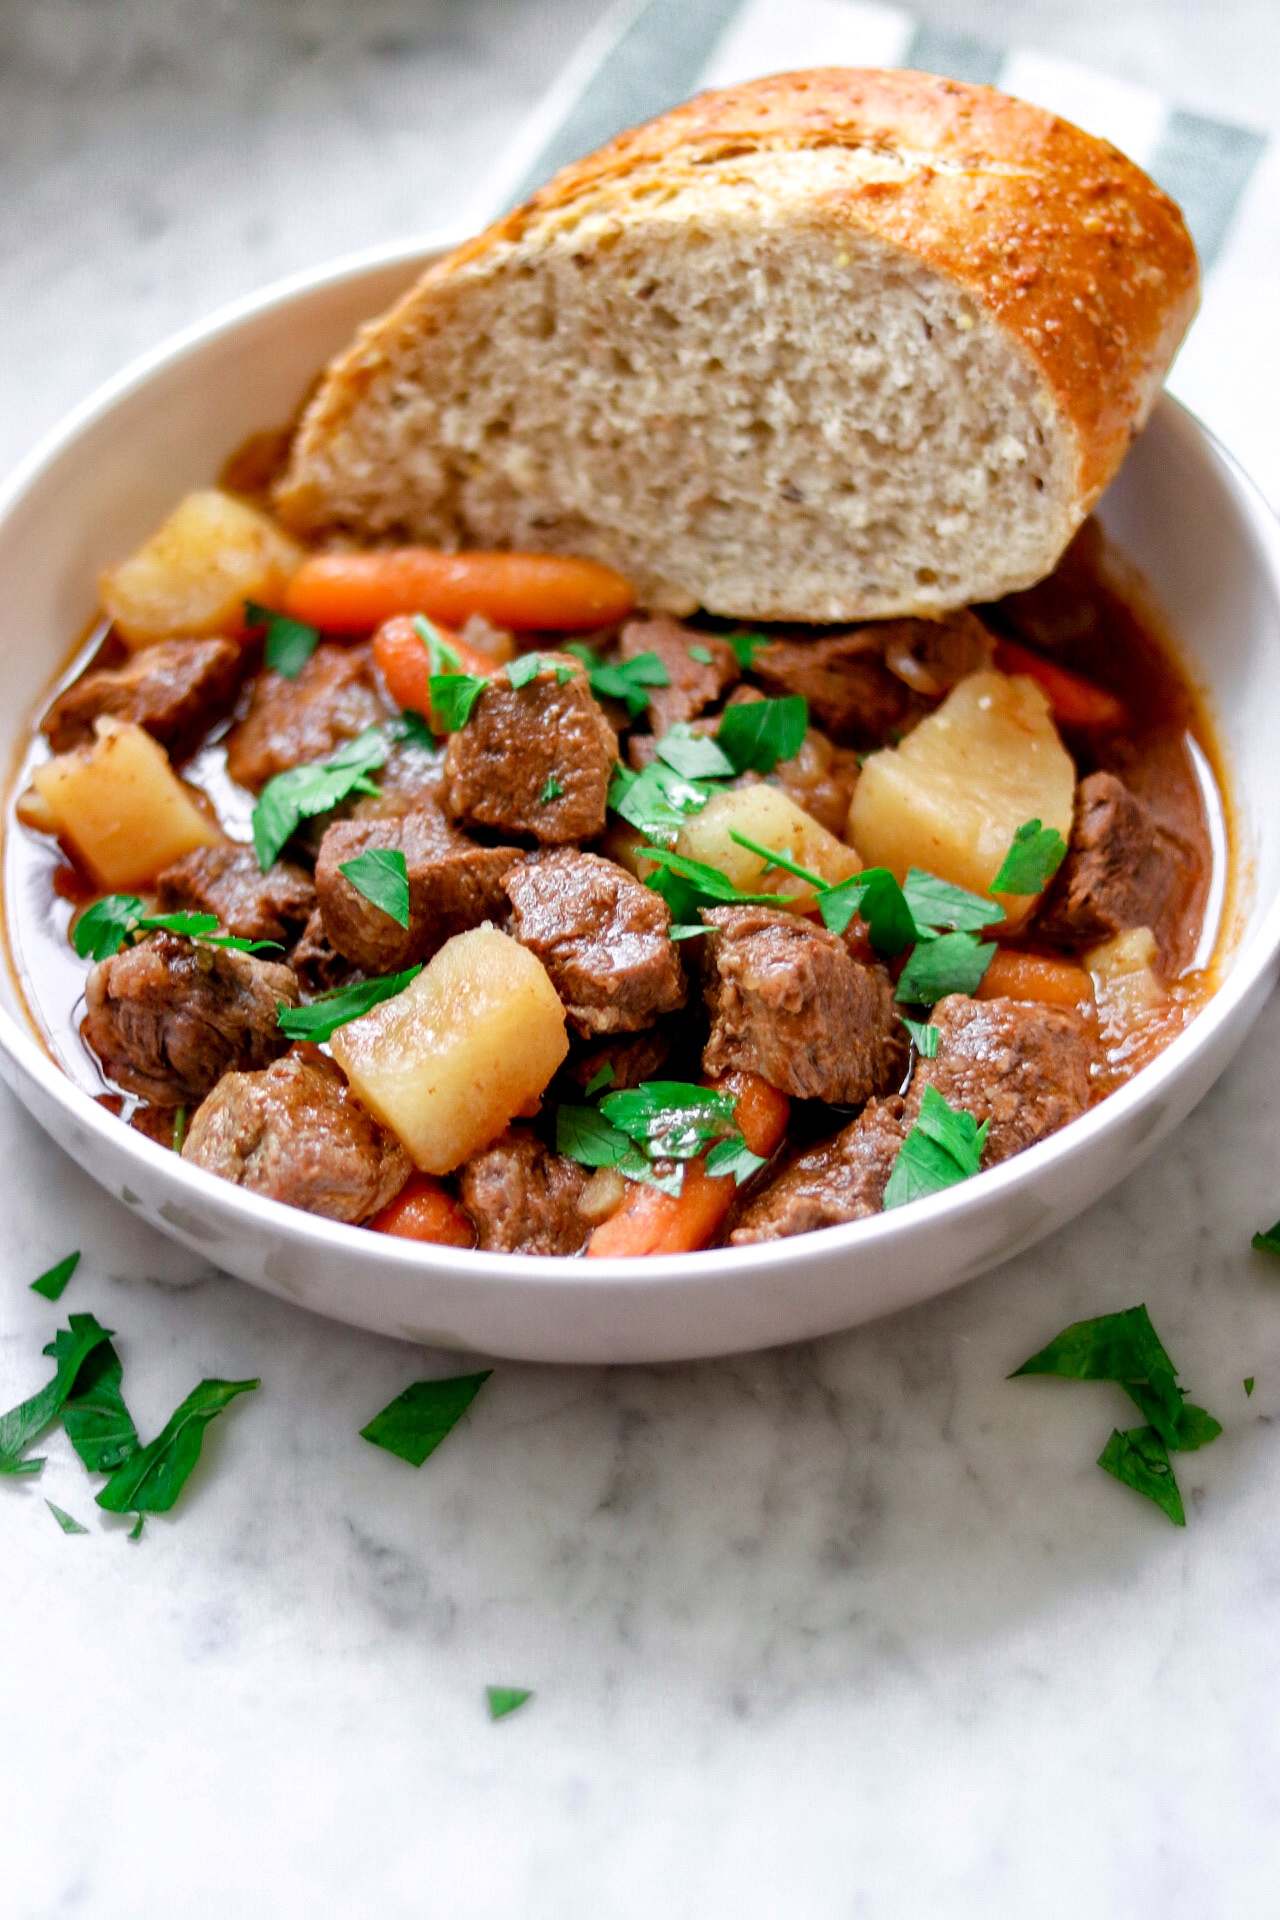 Instant Pot Irish stew